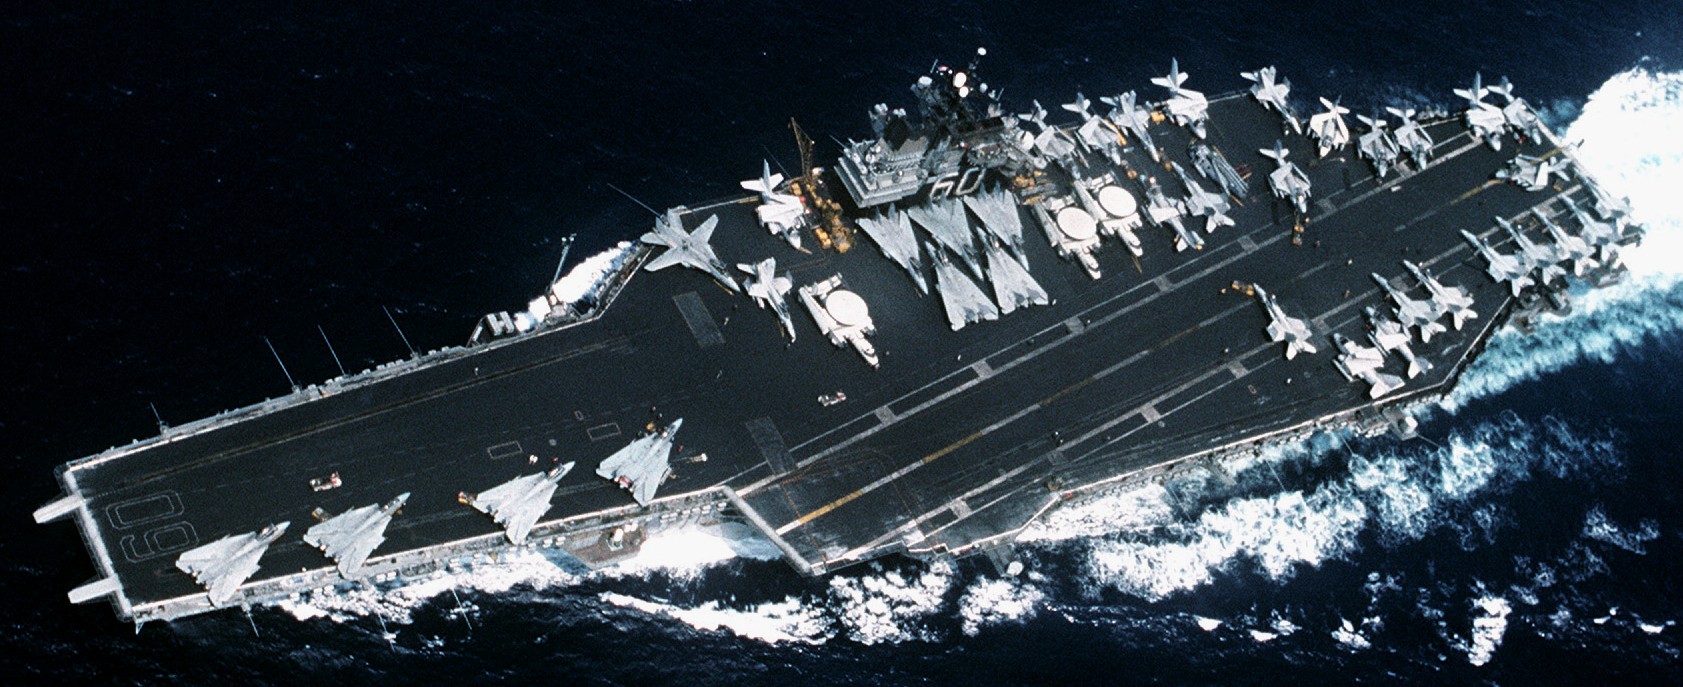 cv-60 uss saratoga forrestal class aircraft carrier air wing cvw-17 us navy mediterranean sea 1992 134